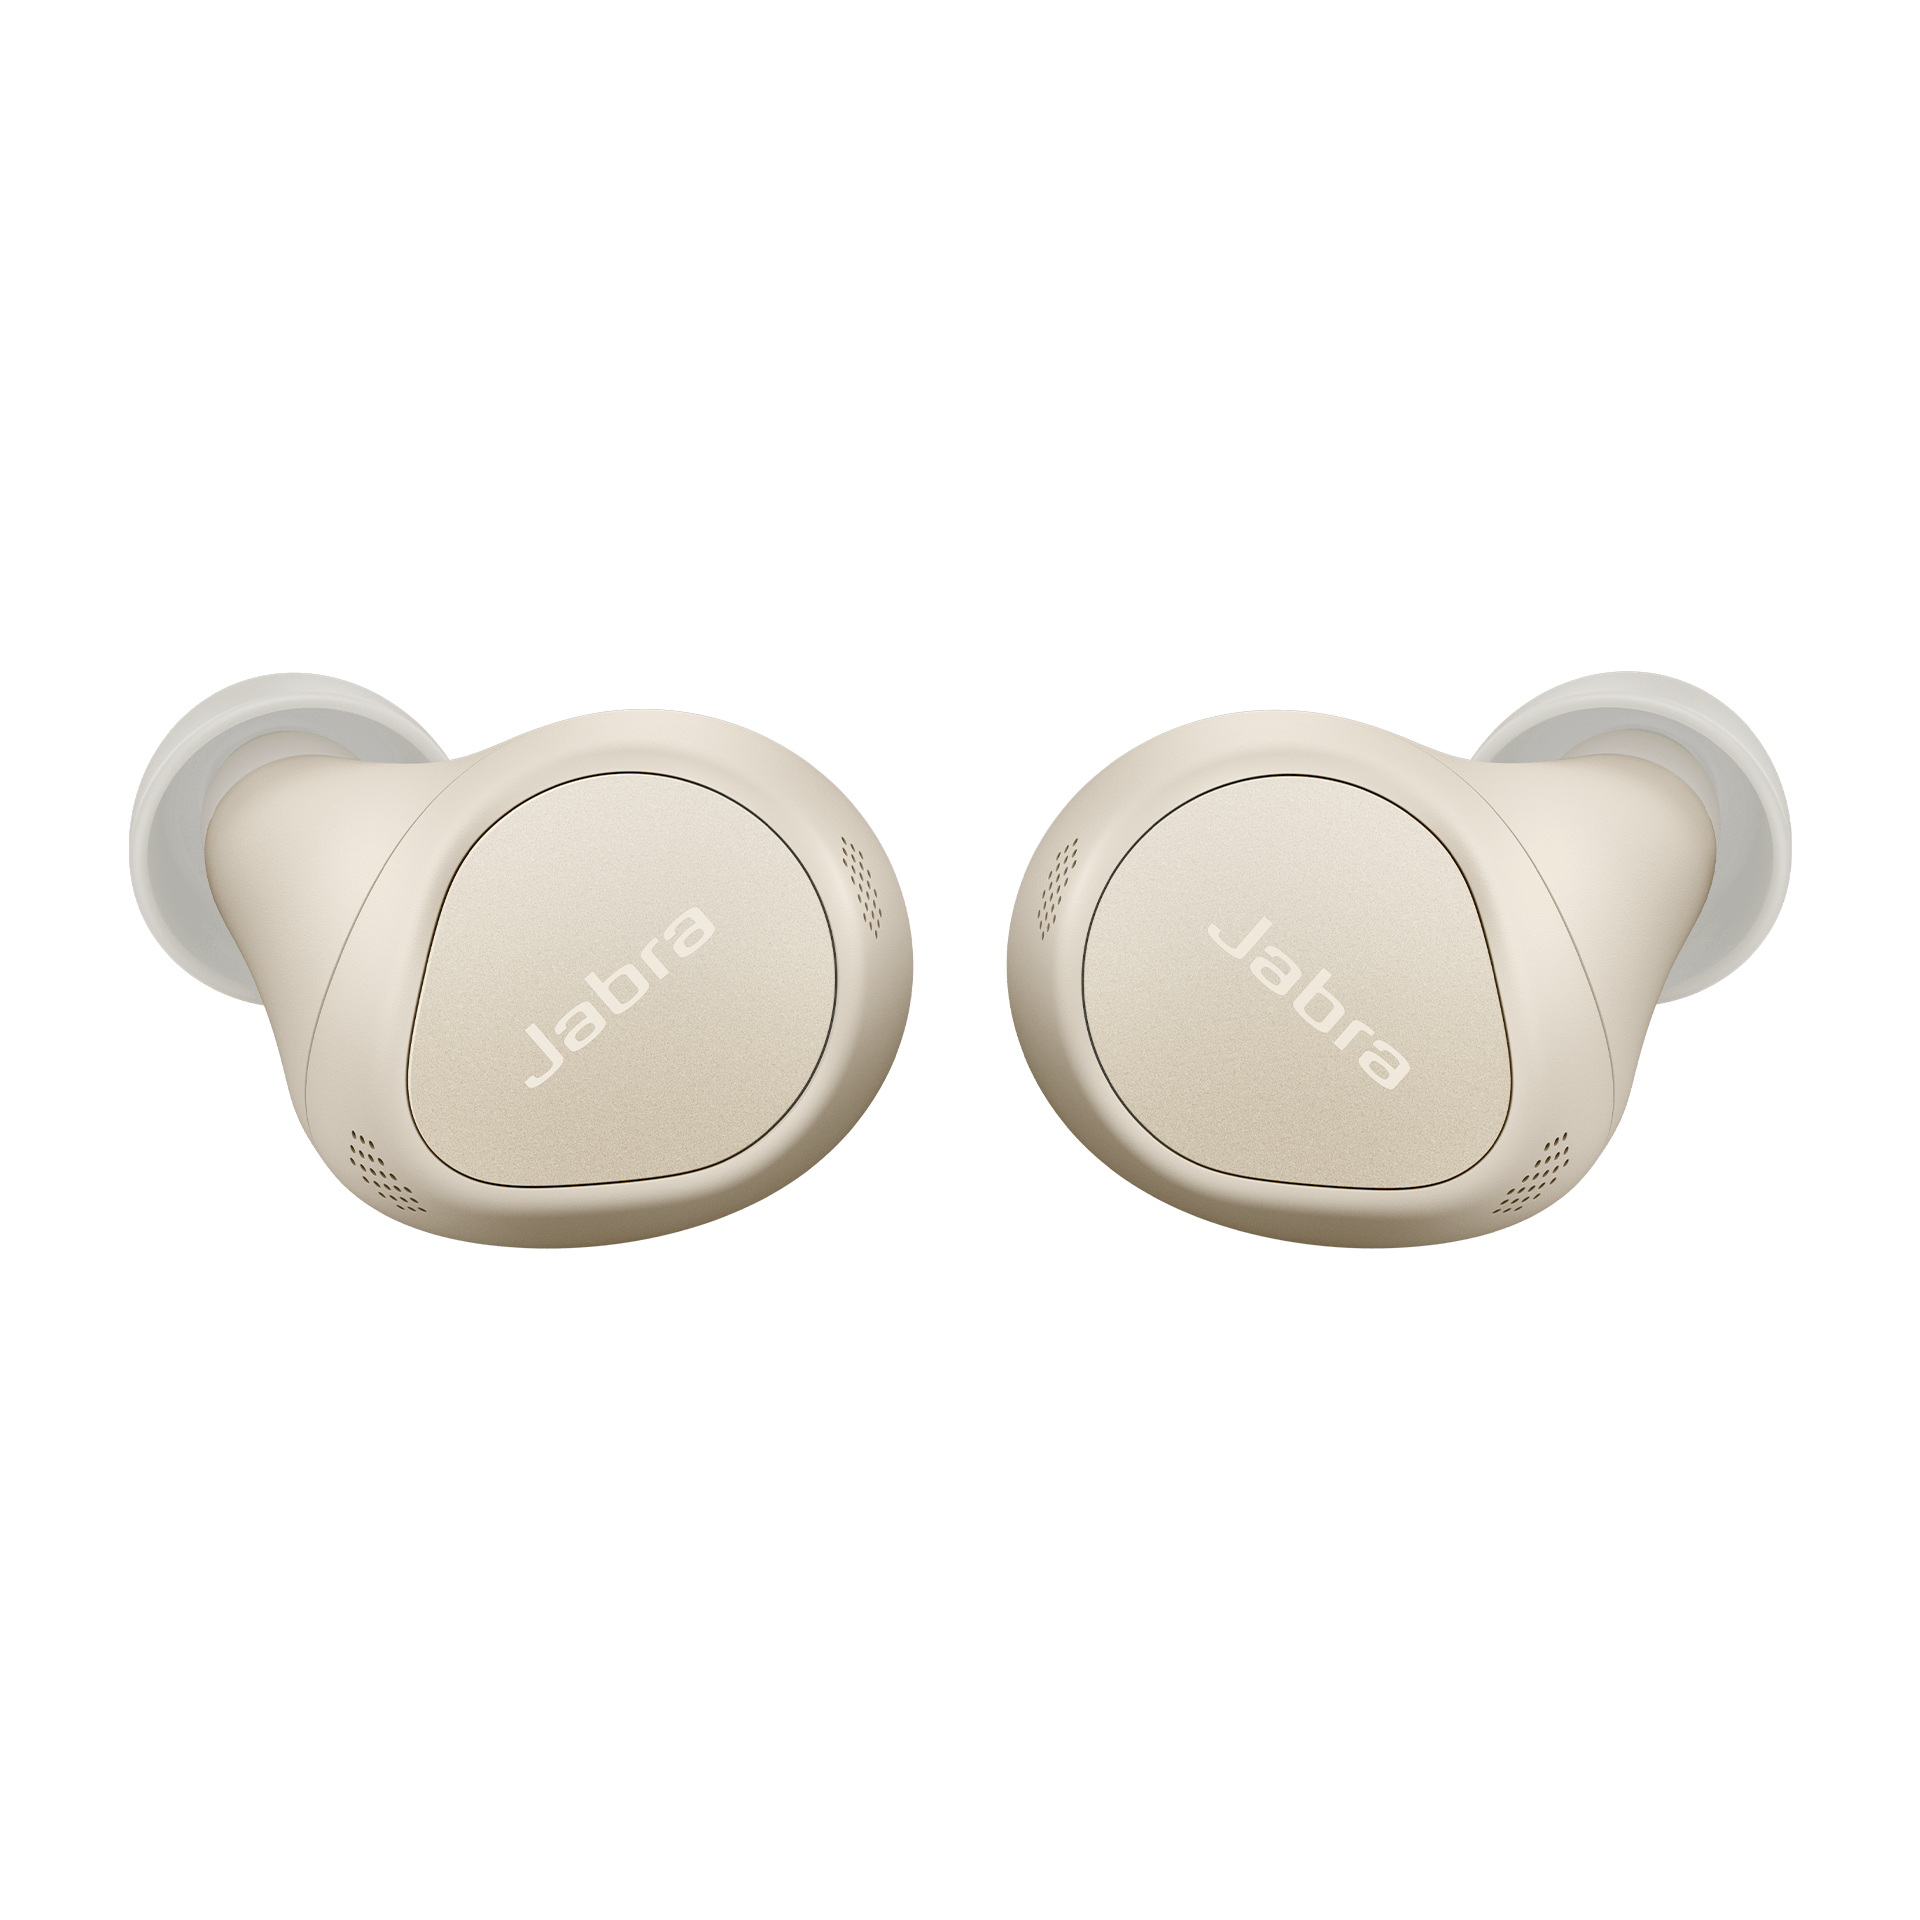 Jabra Elite 7 Pro Replacement Earbuds - Gold Beige